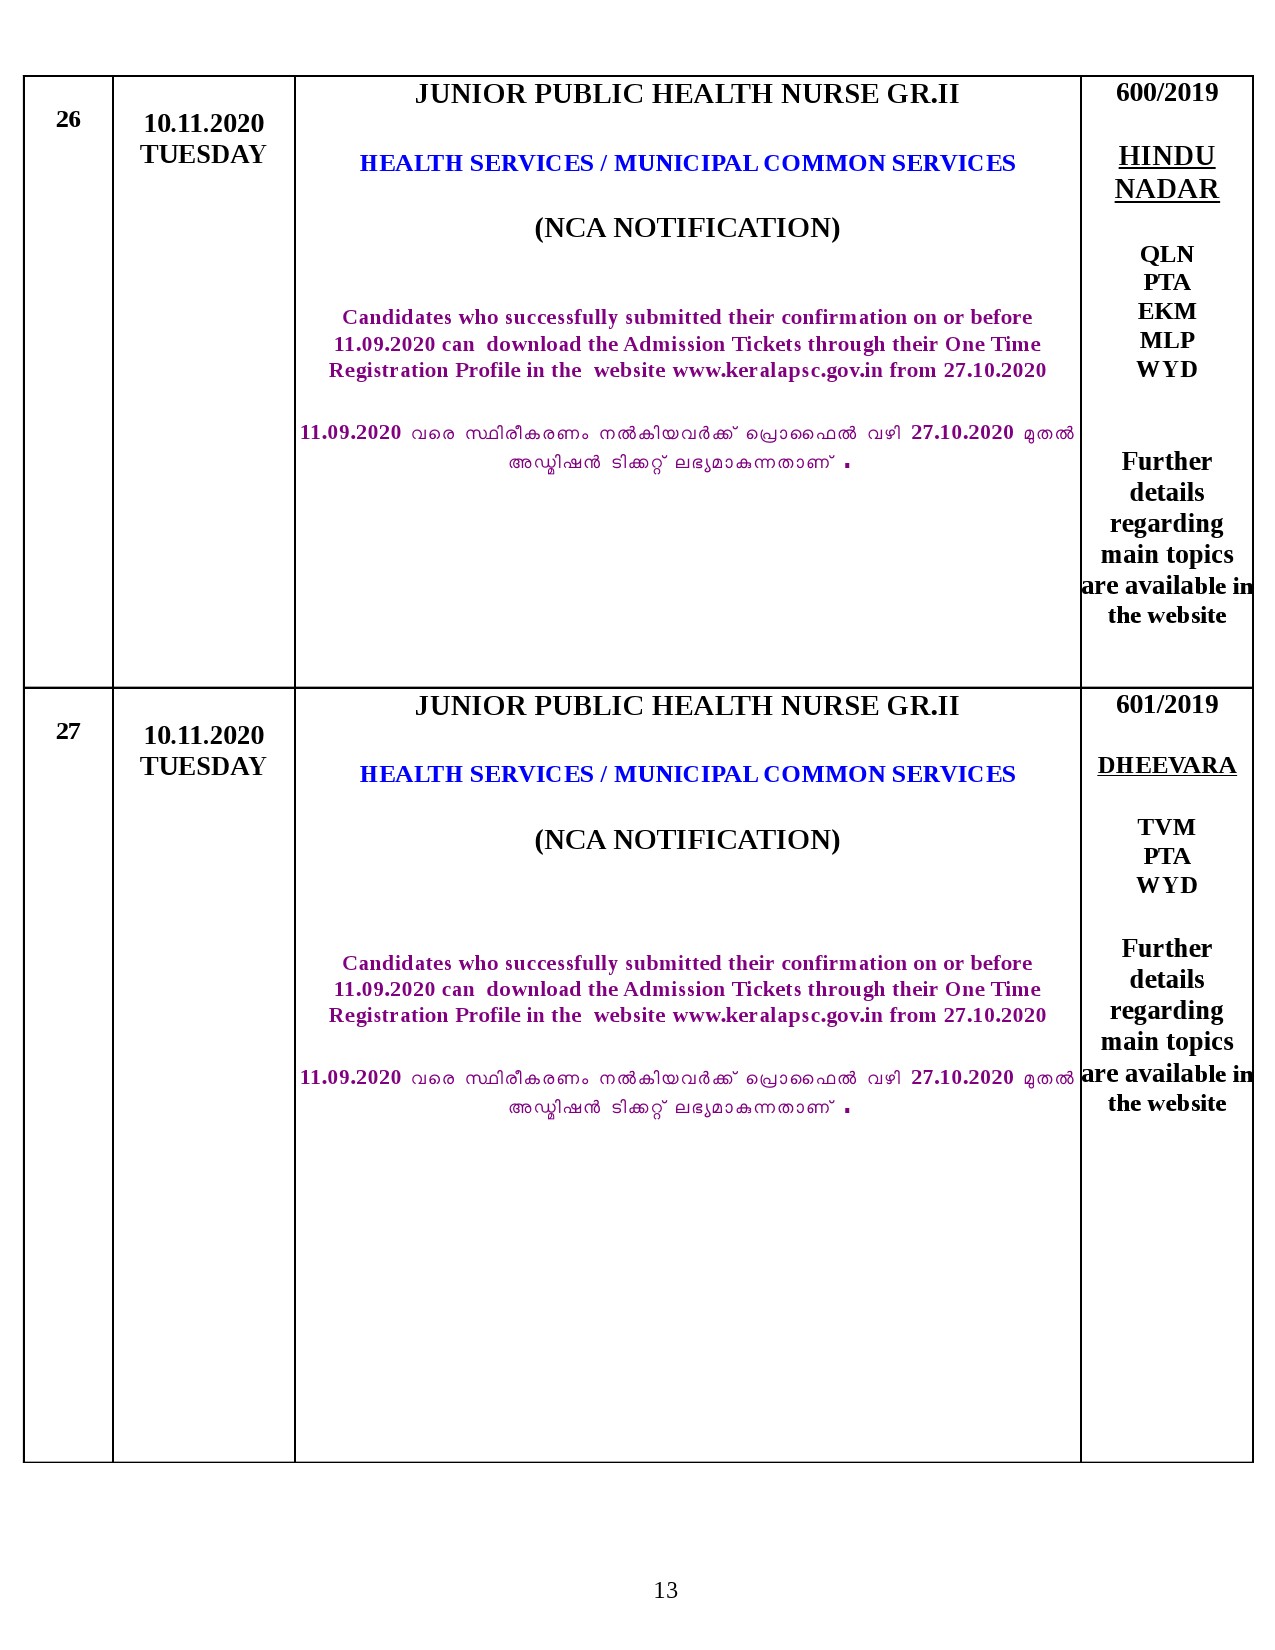 Kerala PSC Final Exam Schedule for November 2020 - Notification Image 13